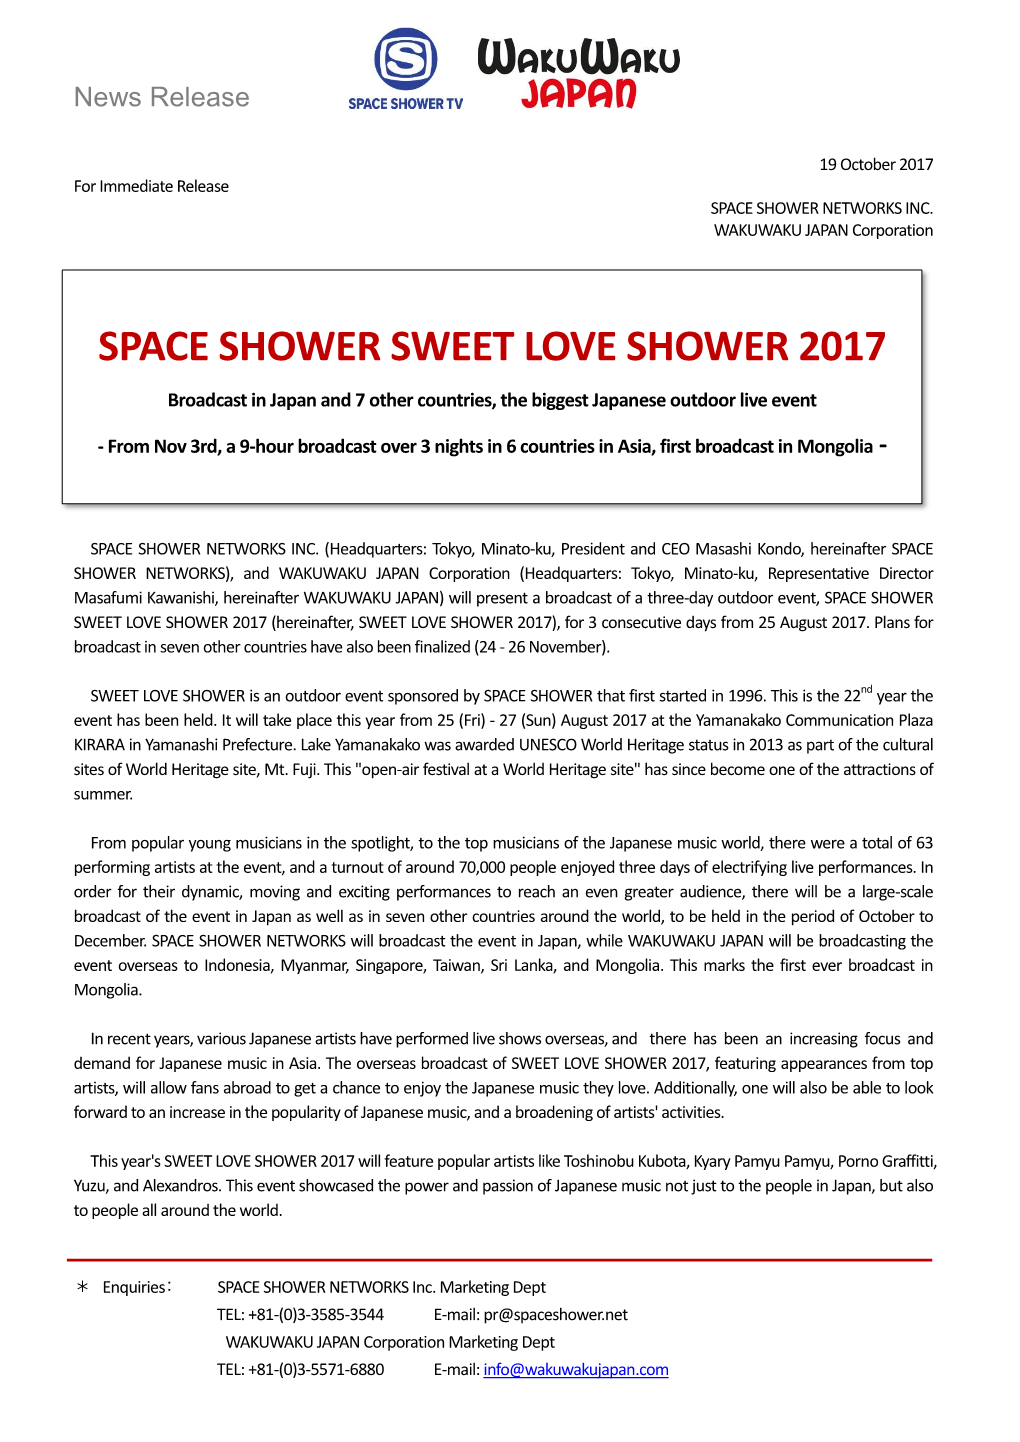 Space Shower Sweet Love Shower 2017